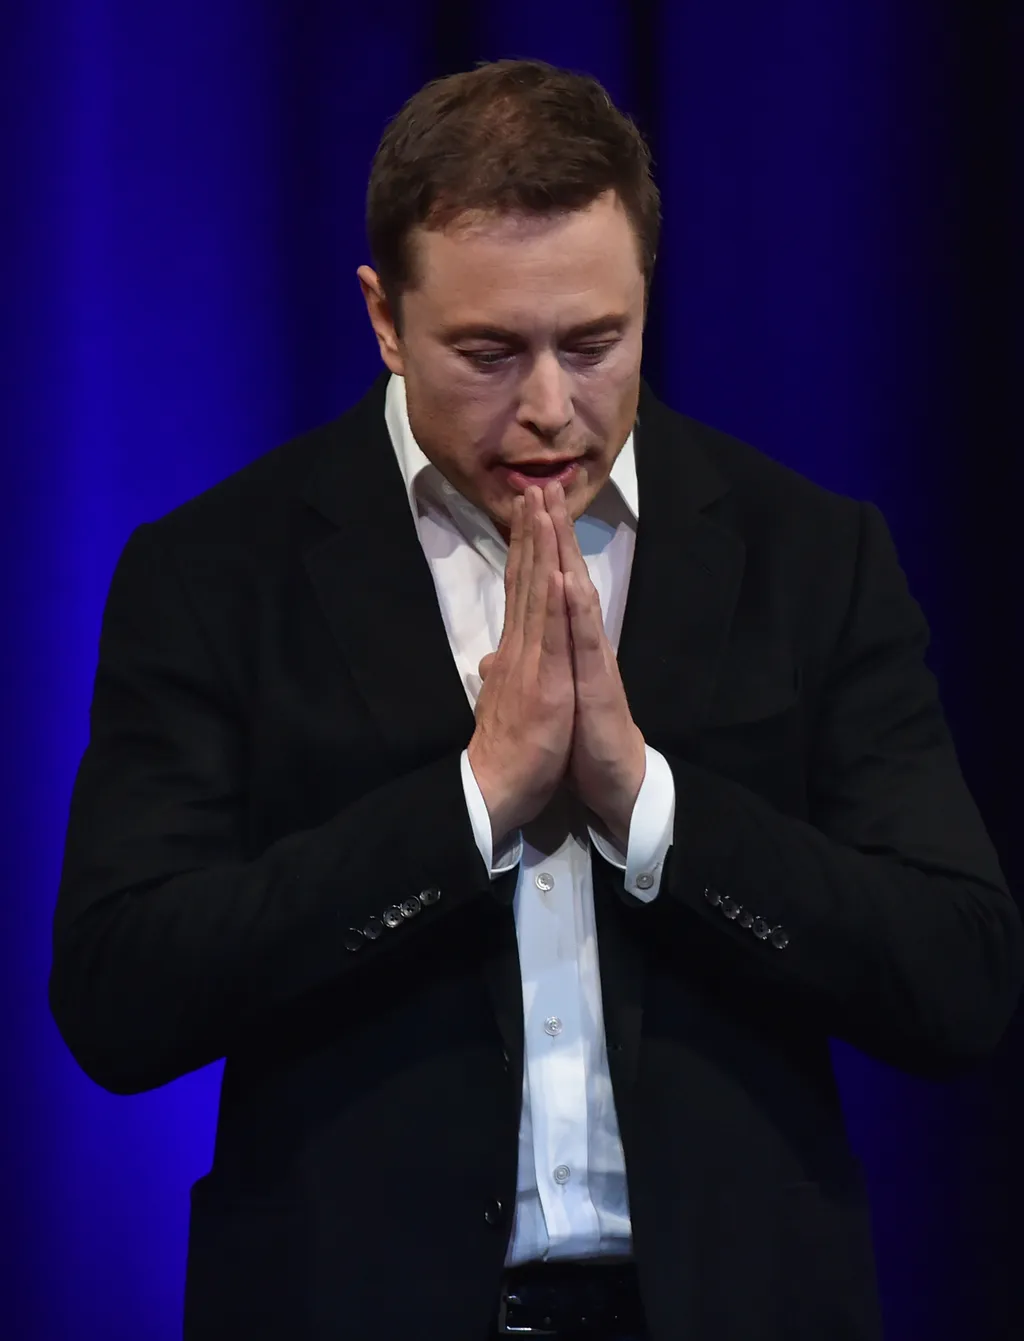 Ennyit keresnek a leggazdagabbak – galéria
Billionaire entrepreneur and founder of SpaceX Elon Musk speaks at the 68th International Astronautical Congress 2017 in Adelaide 